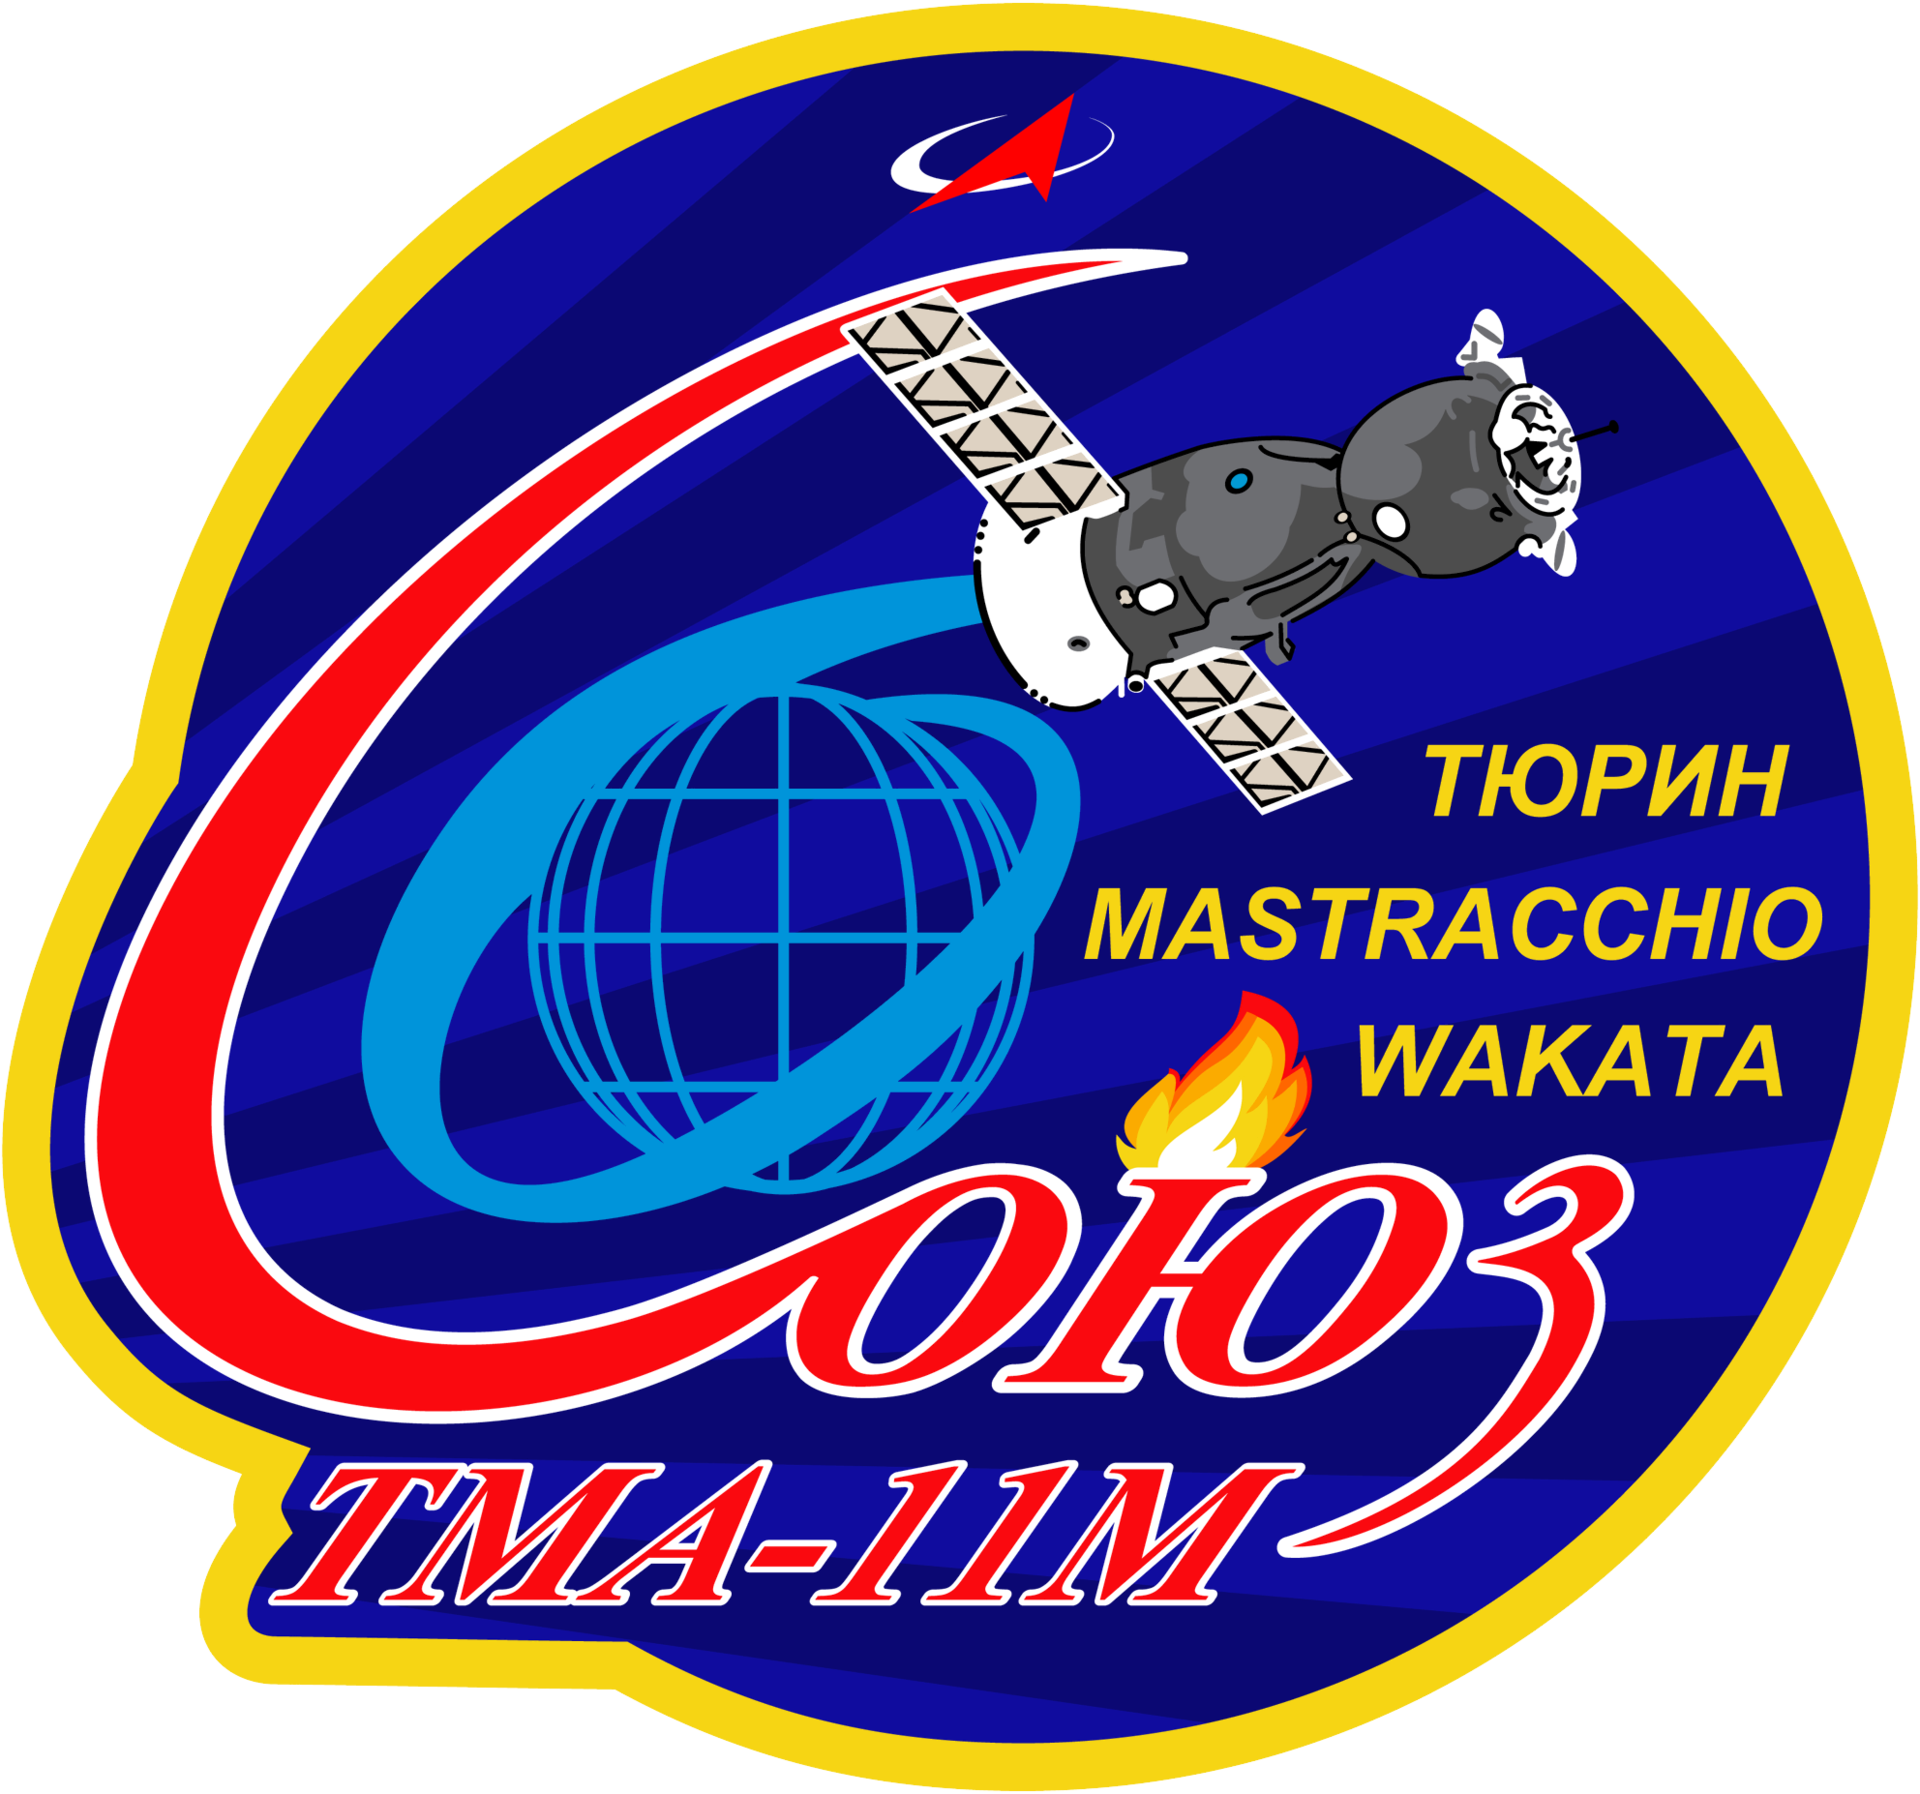 Mission patch for Soyuz TMA-11M